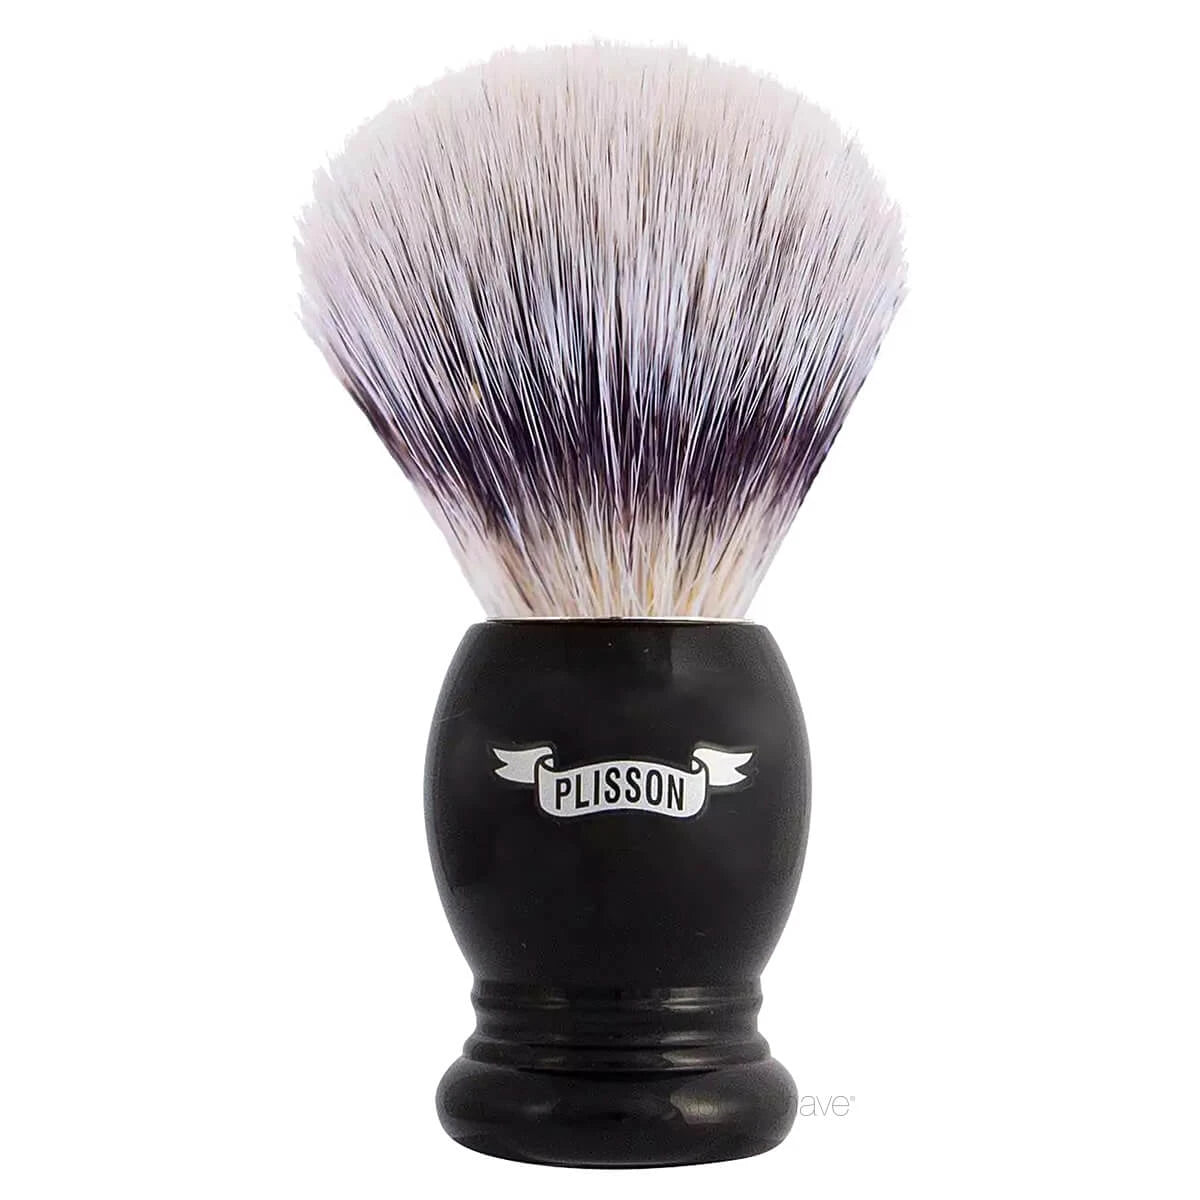 Plisson Shaving Brush, High Mountain White Fibre & Black Acryl- Size 12